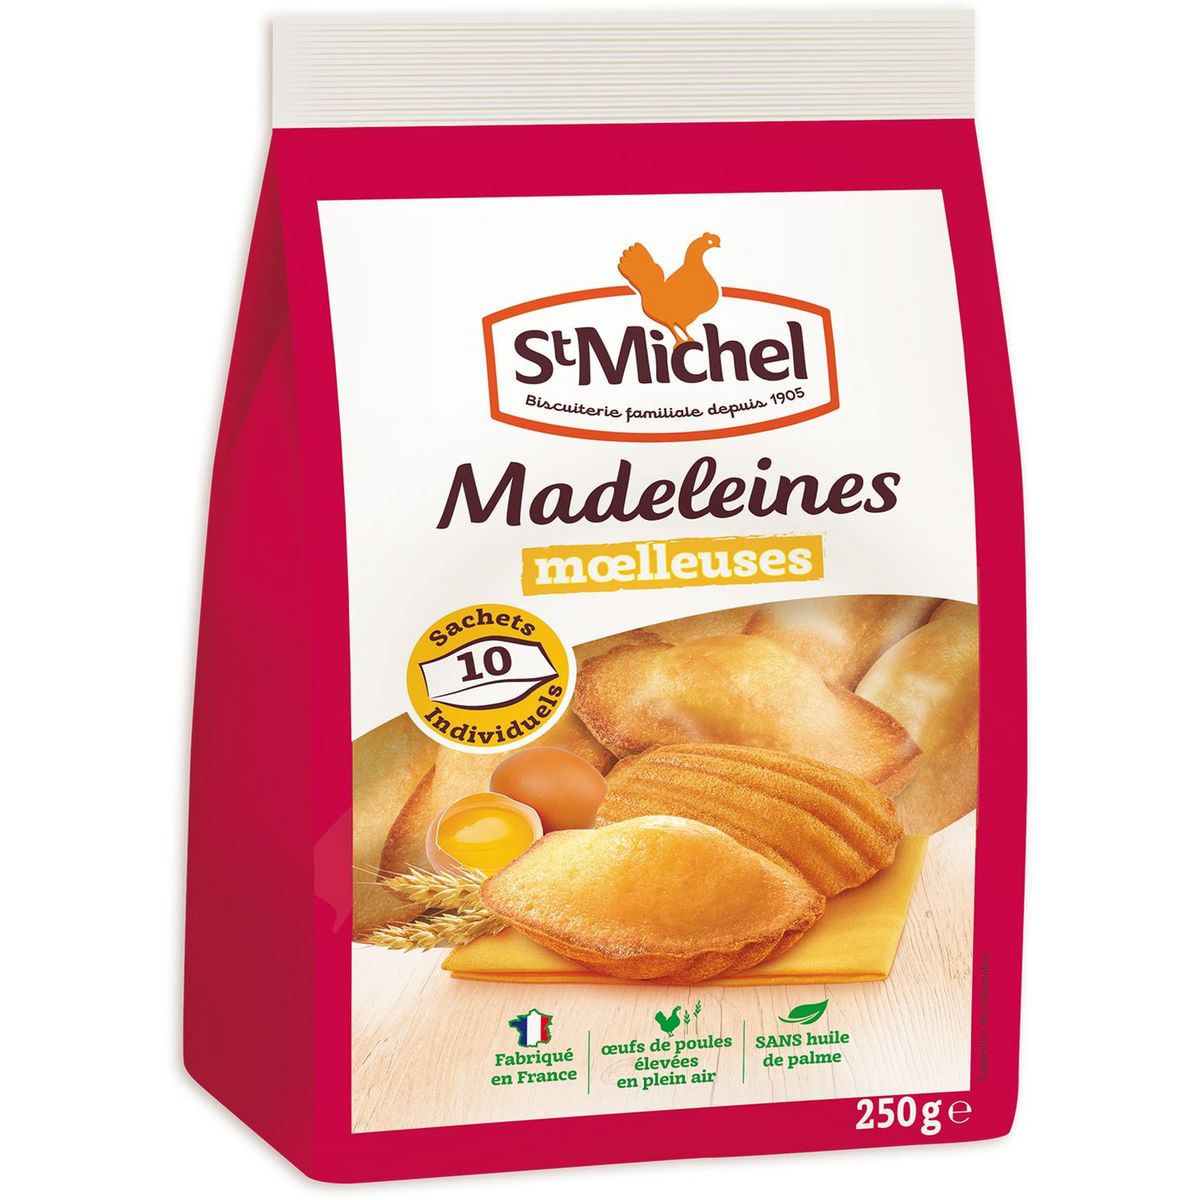 ST MICHEL Madeleines moelleuses sans huile de palme, sachets individuels 10 madeleines 250g